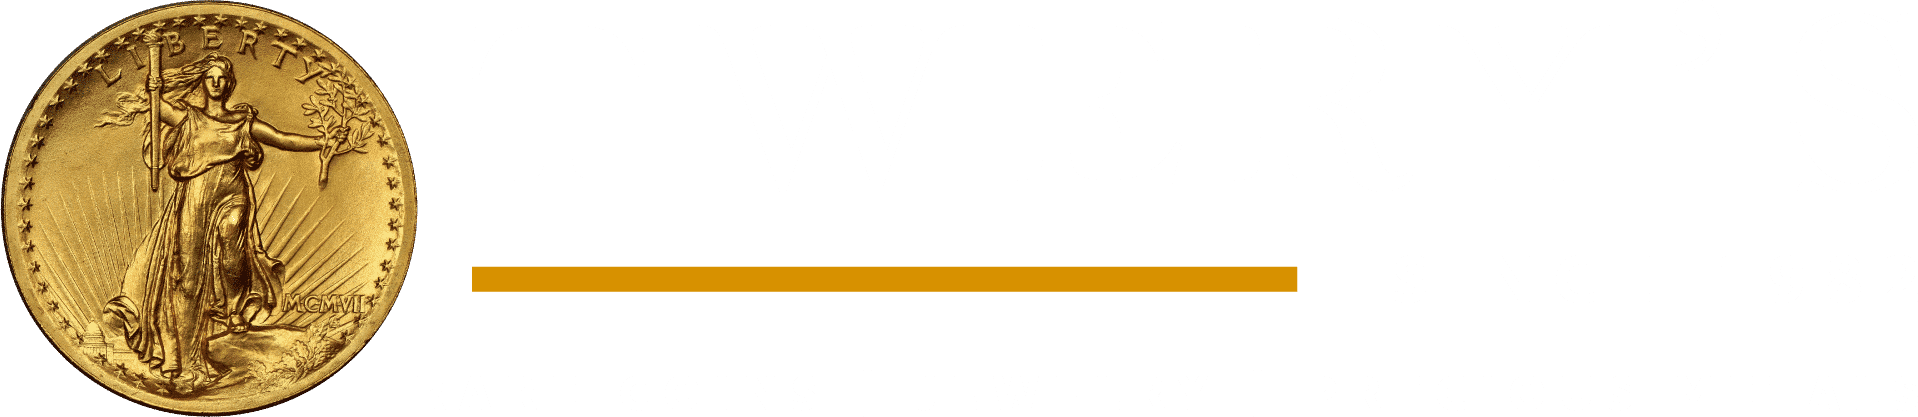 Twery's Rare Coins & Jewelry Logo